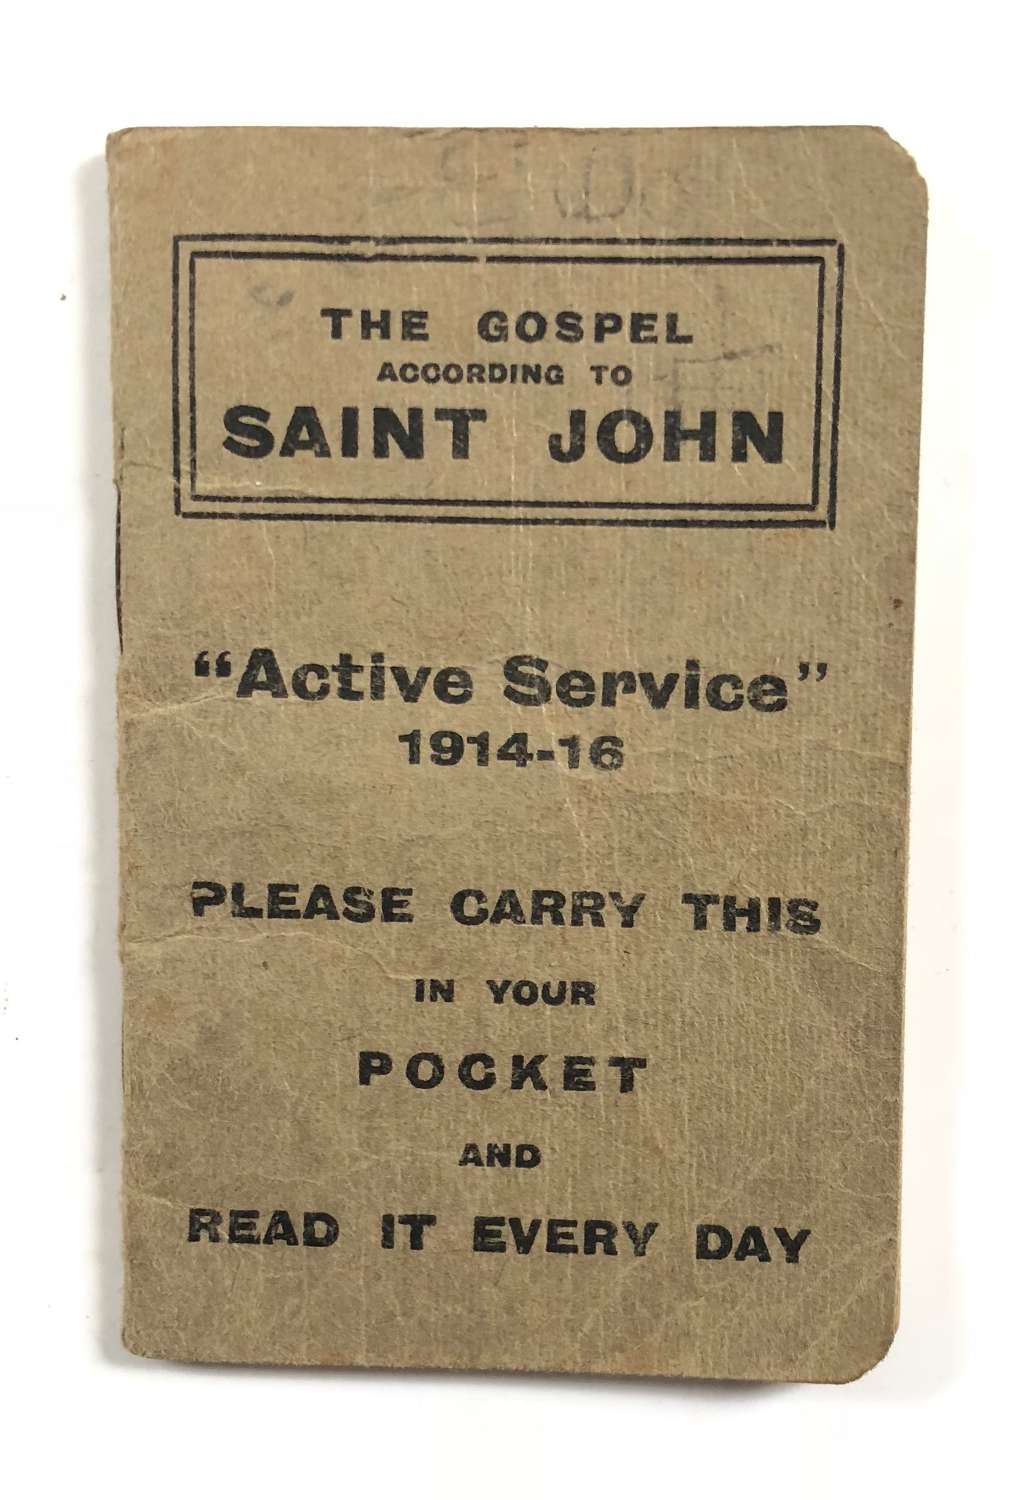 WW1 1914-1916 Active Service Gospel according to Saint John.